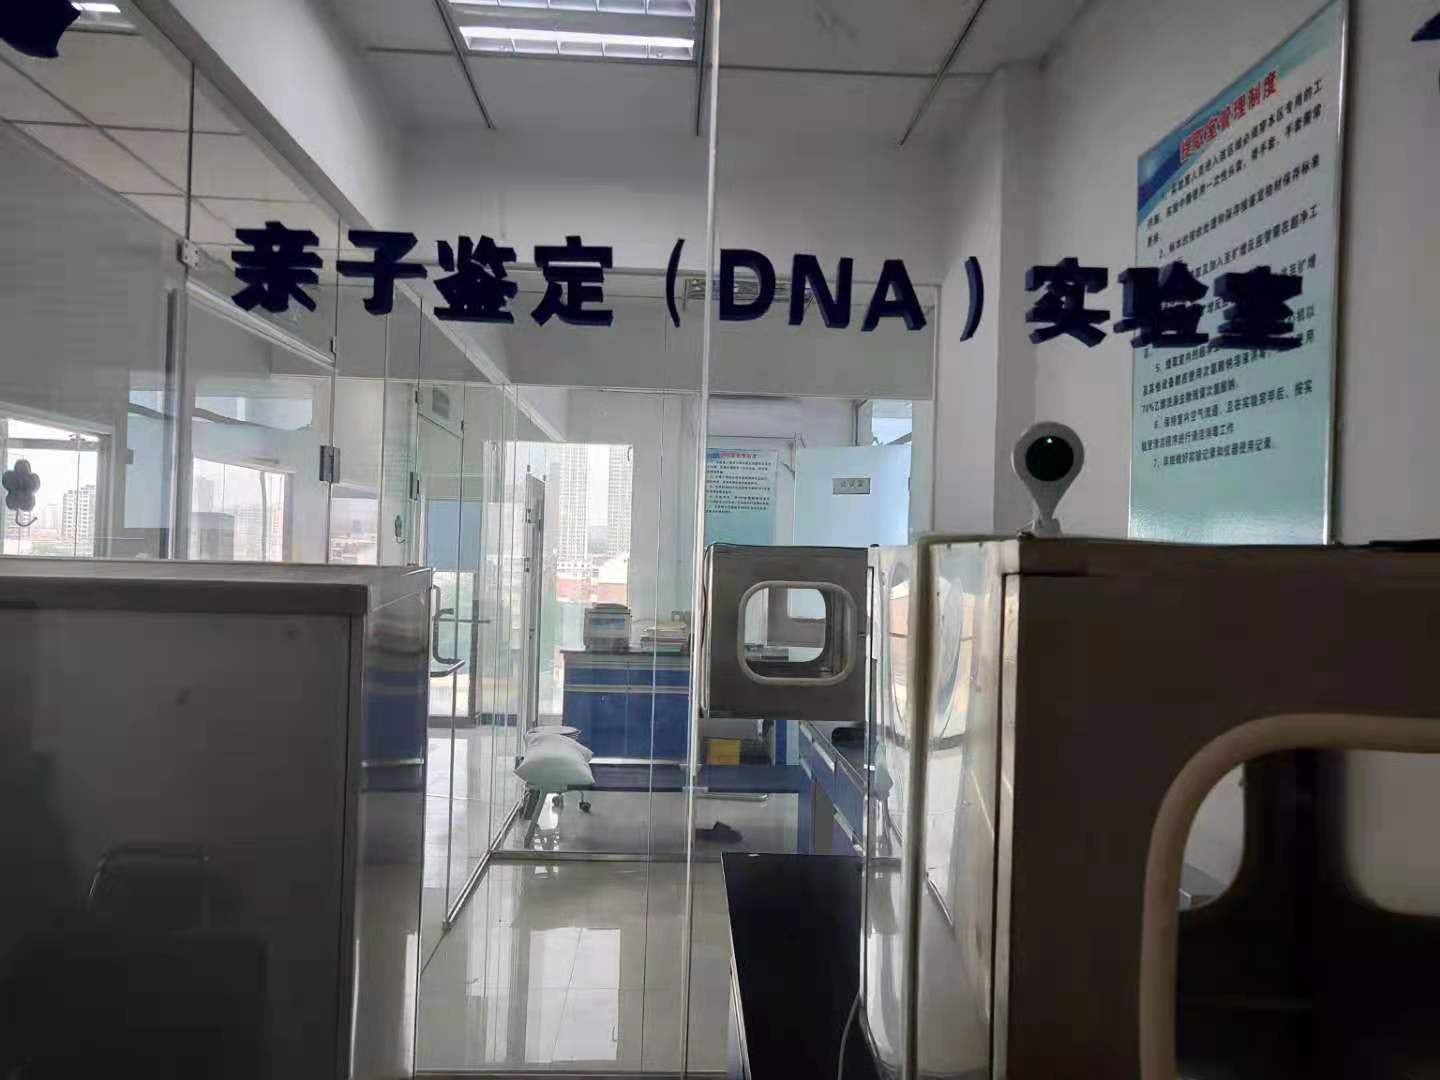 DNA亲子鉴定流程 长春市鉴科生物技术服务有限公司